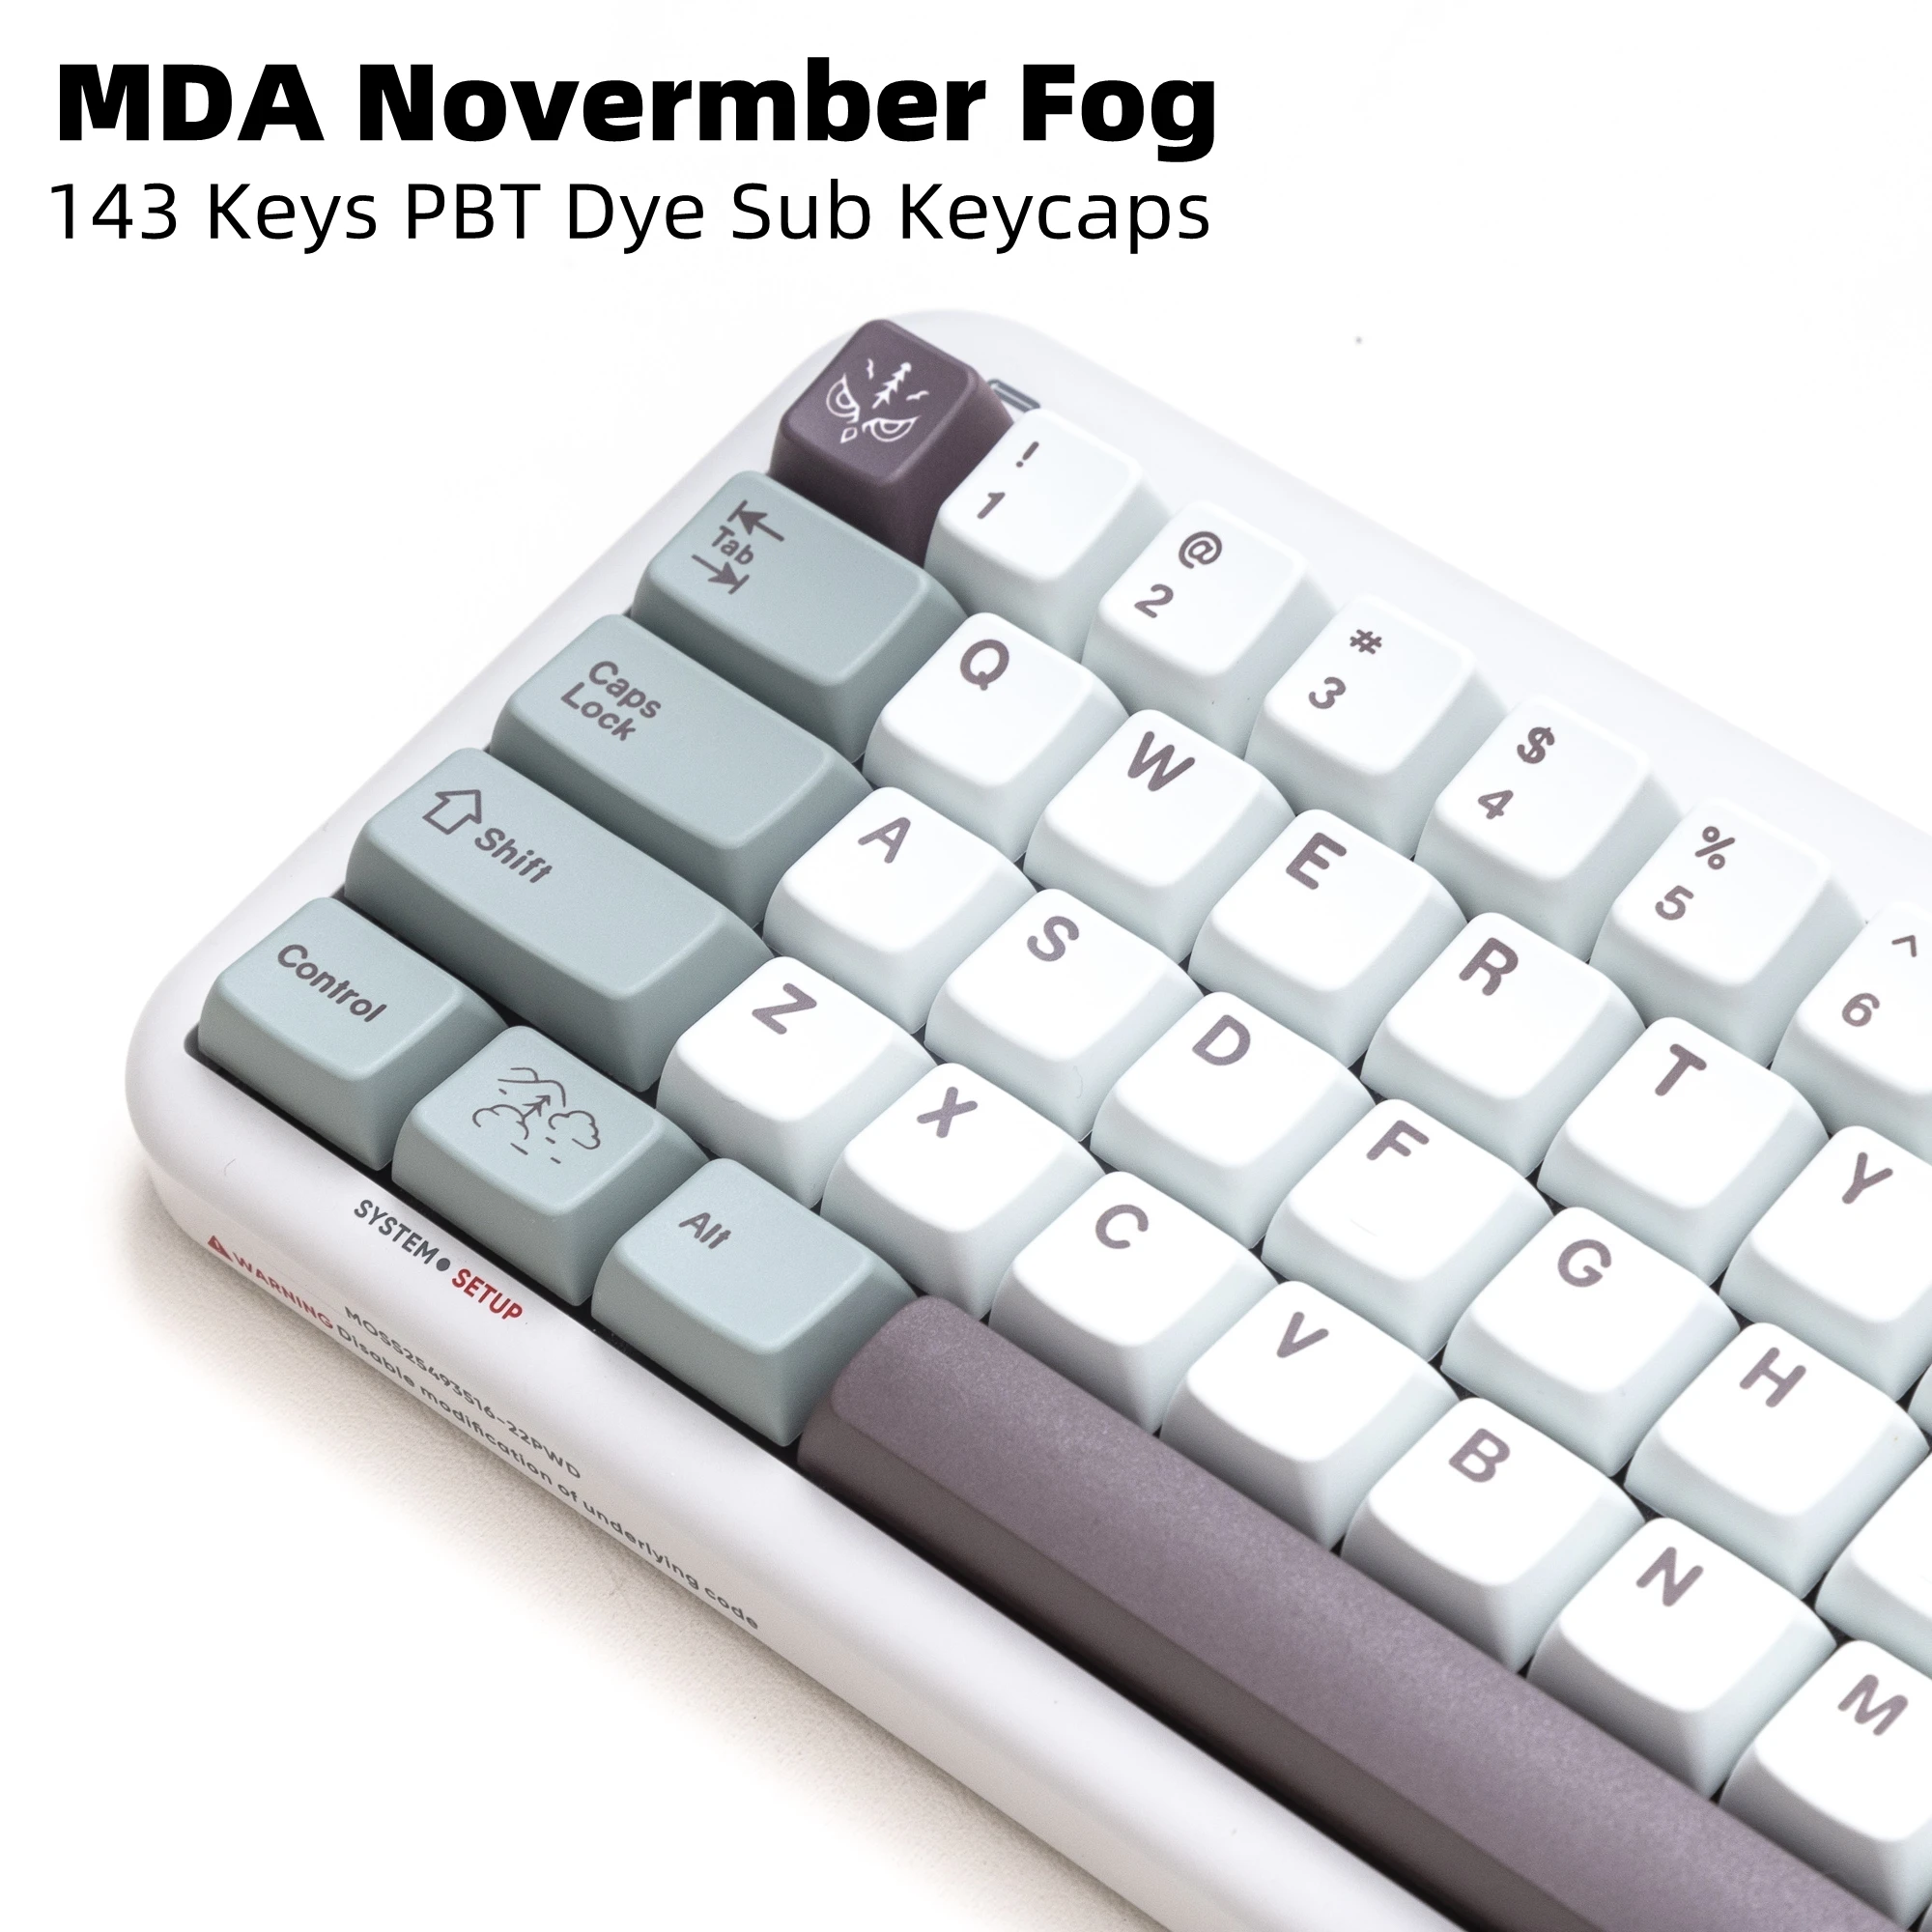 Eagiacme Cherry/MDA Profile Keycap PBT Dye Sublimation Keycaps GMK Clone November Fog For Mechanical Keyboard Mx Switch